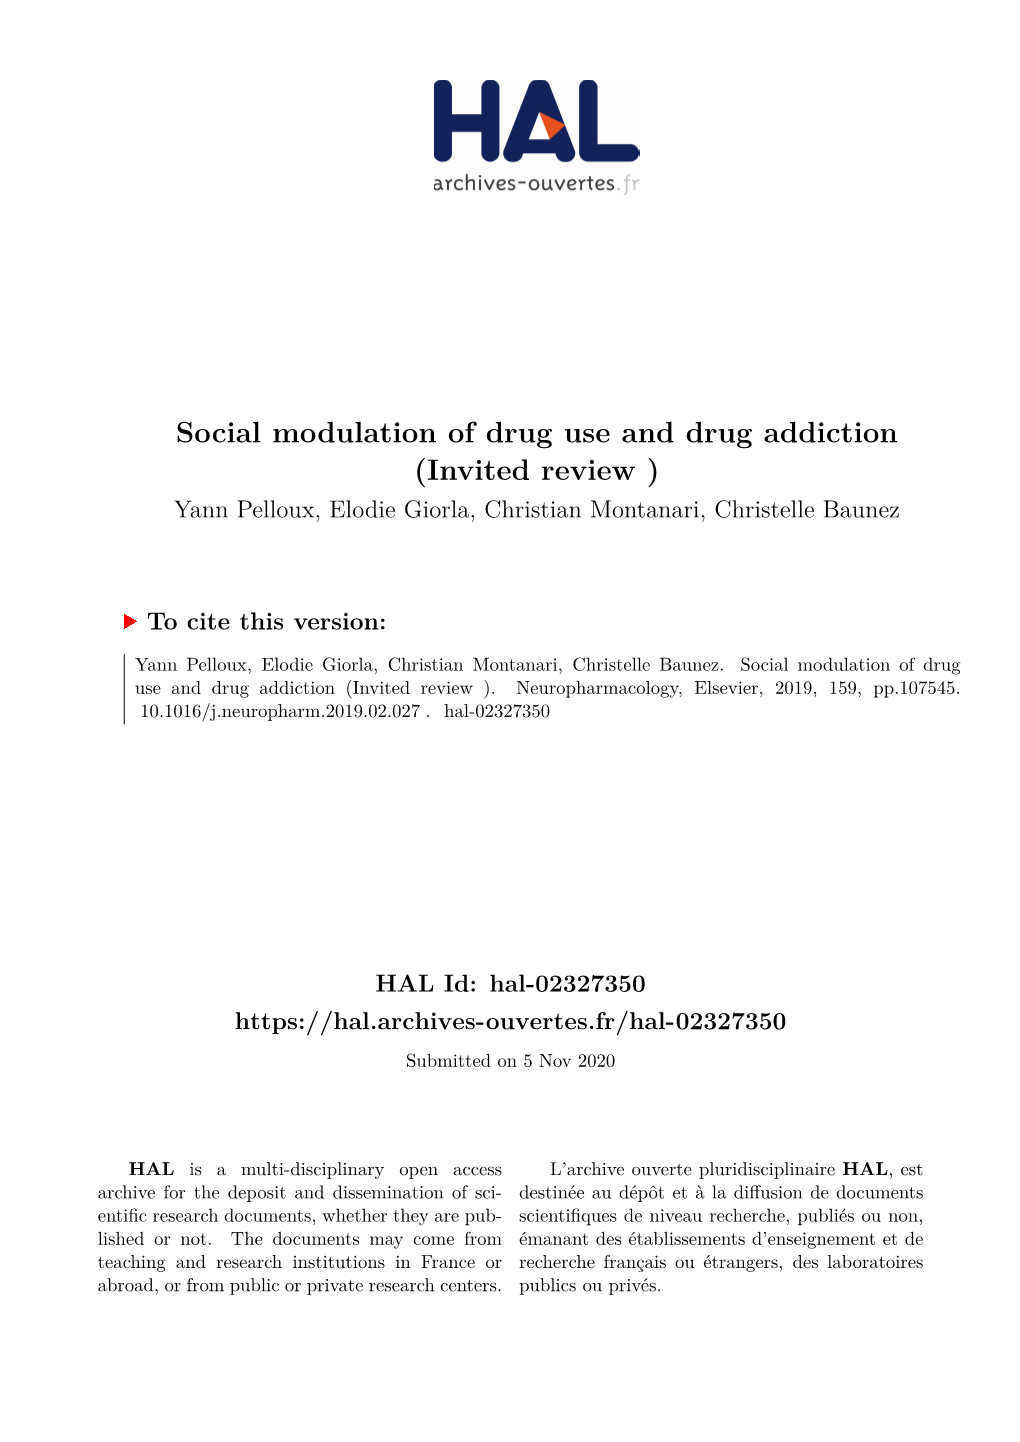 Social Modulation of Drug Use and Drug Addiction (Invited Review ) Yann Pelloux, Elodie Giorla, Christian Montanari, Christelle Baunez